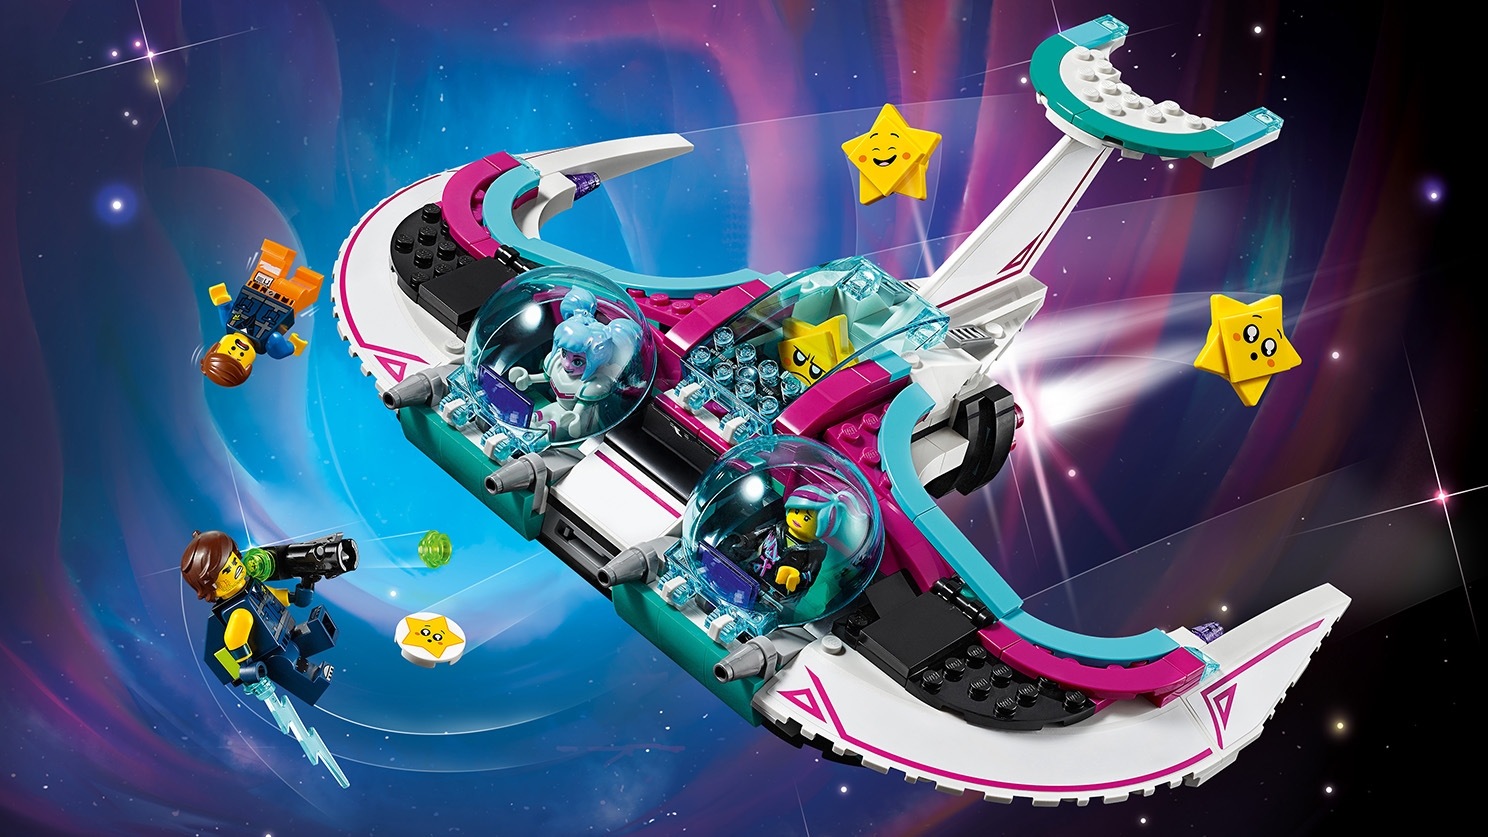 Lego 70849 The Lego Movie 2 Wyld-Mayhem Star Fighter New Exclusive Spaceship Set